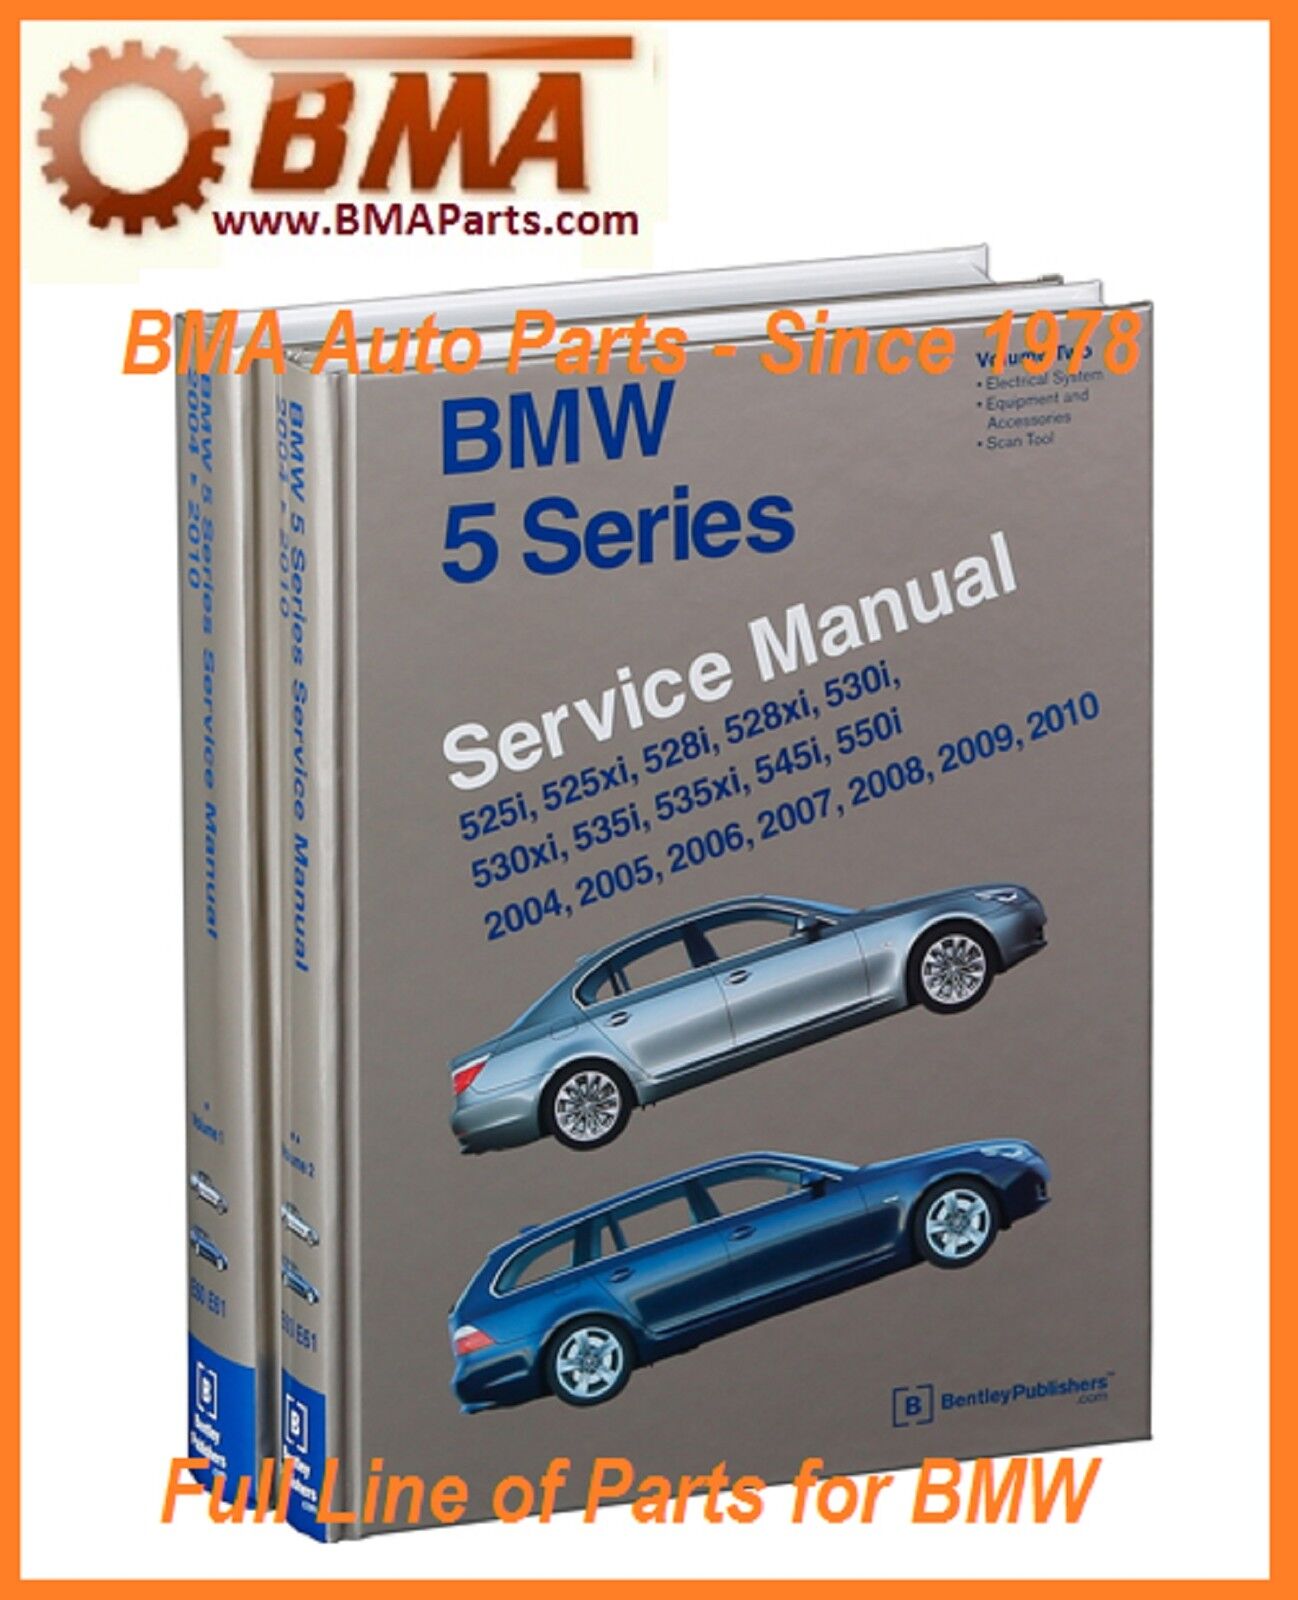 NEW BMW 5 Series E60, E61 Bentley Service Manual (2004-2010) Part # B510